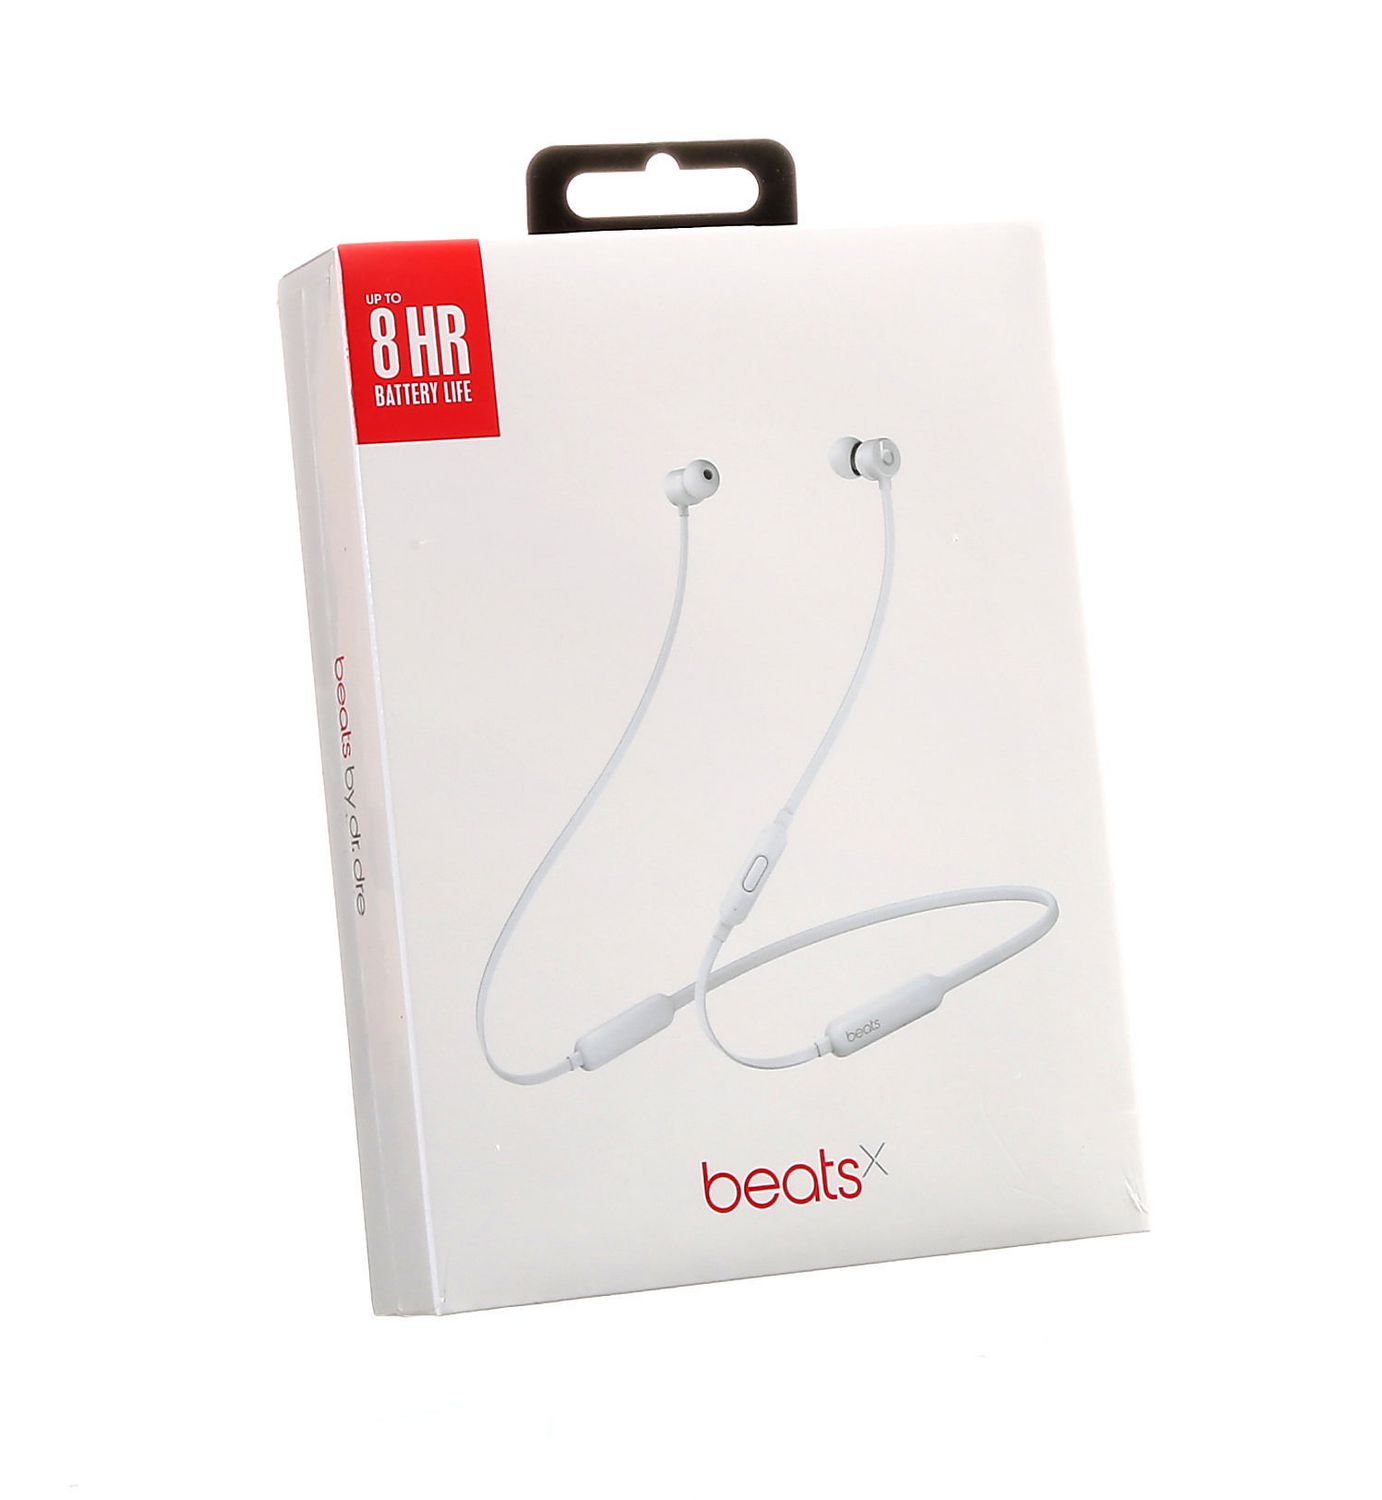 beatsx earphones battery life